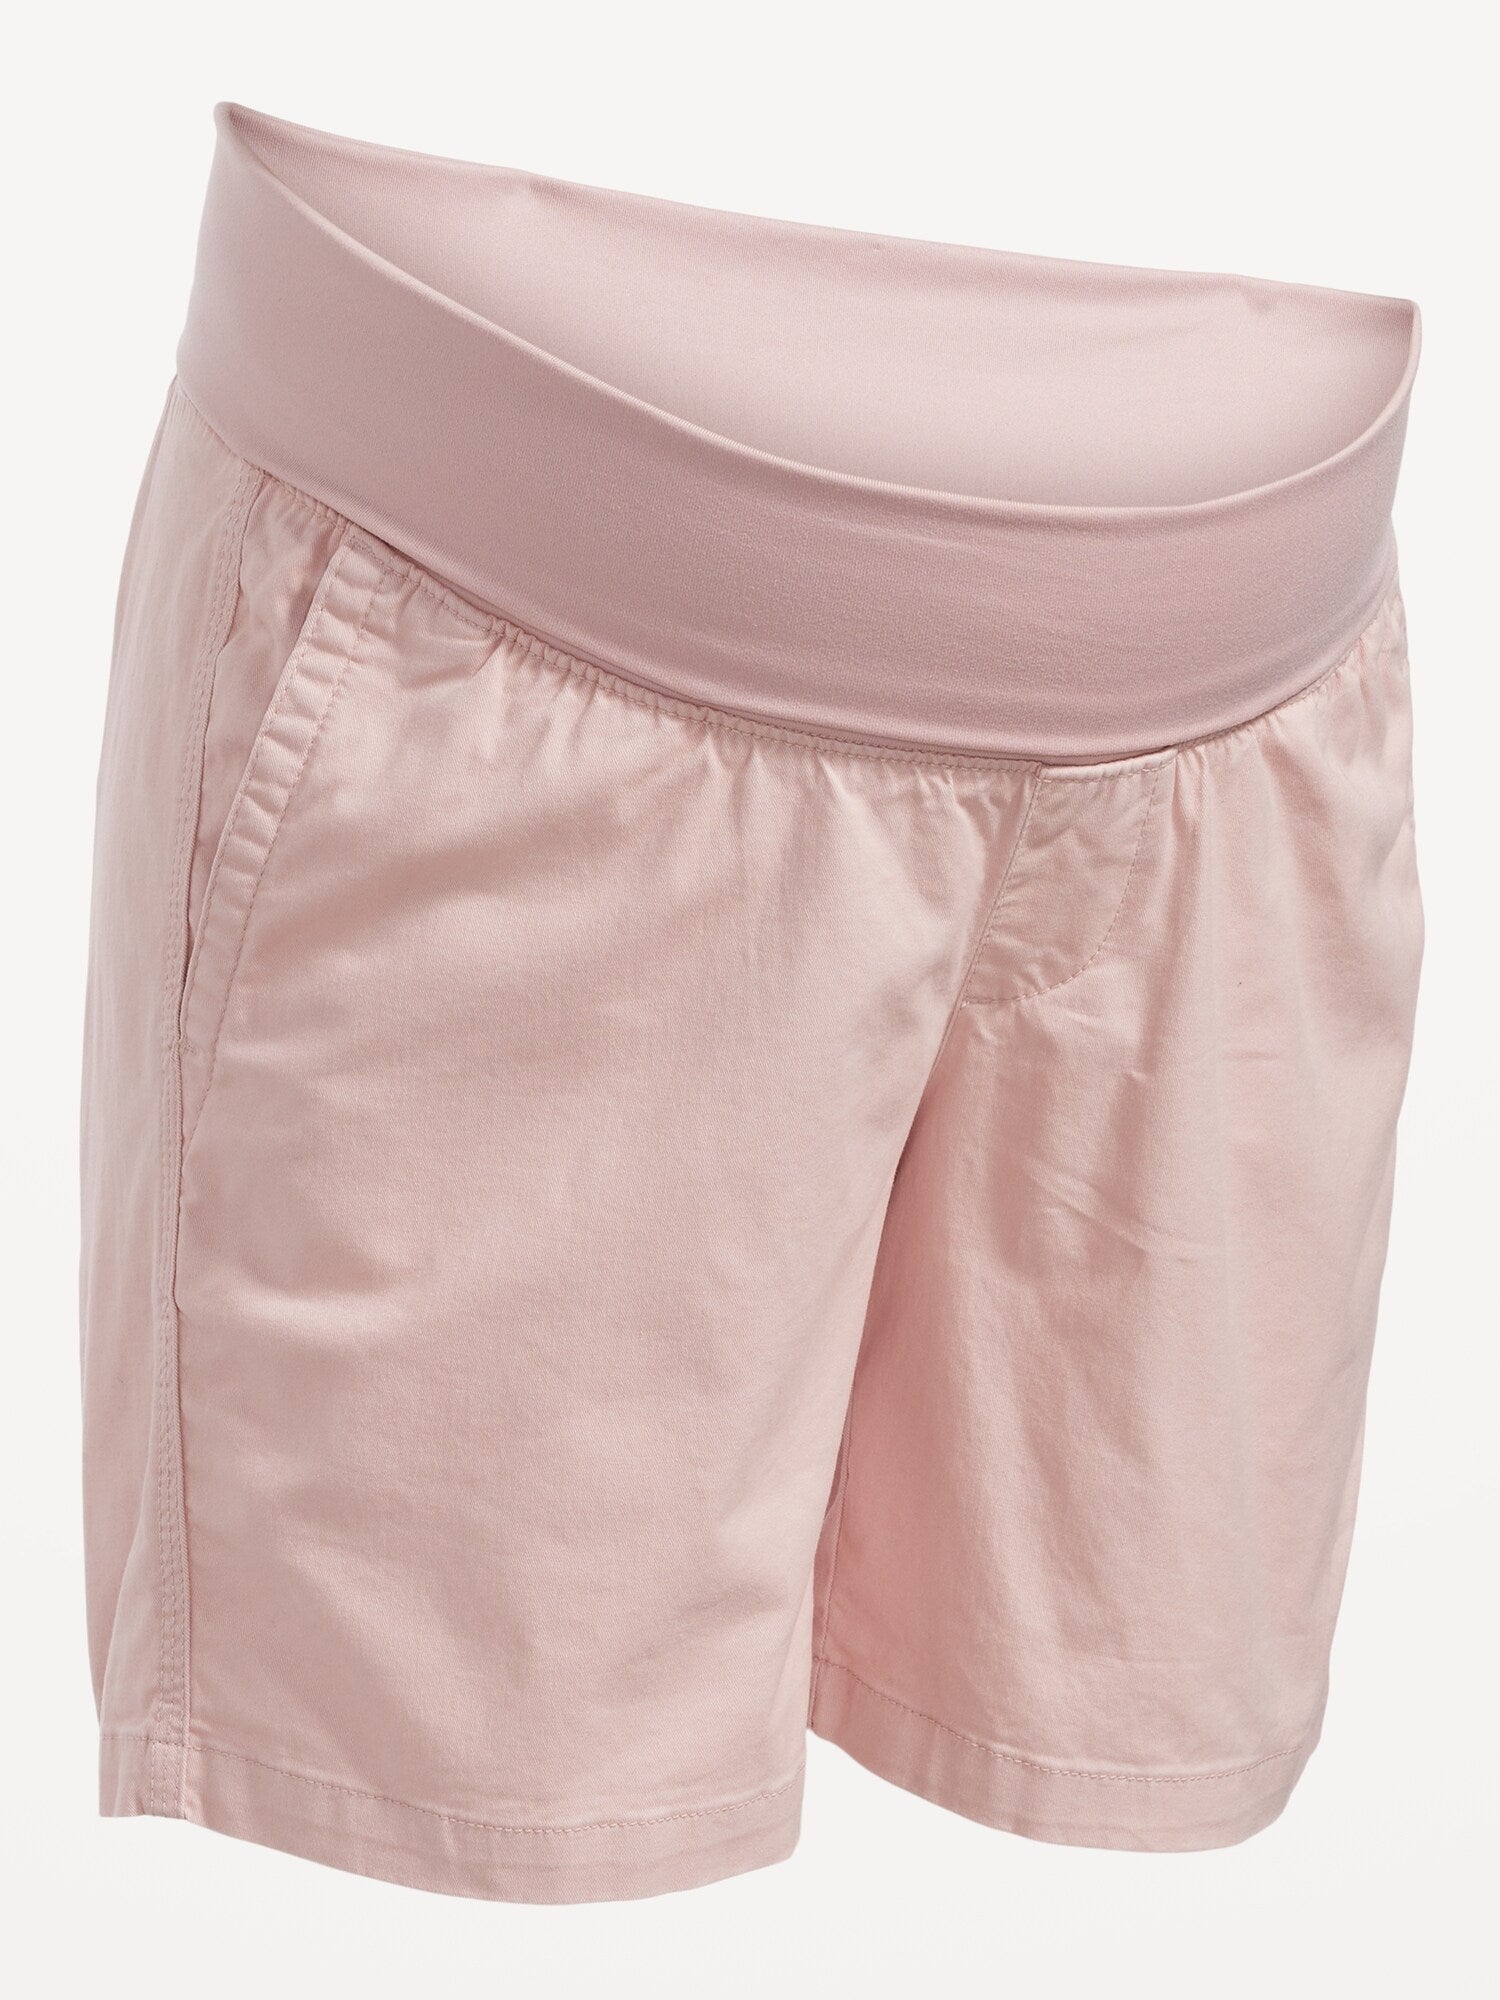 Old Navy Maternity Rollover-Waist OGC Chino Shorts -- 5-inch inseam